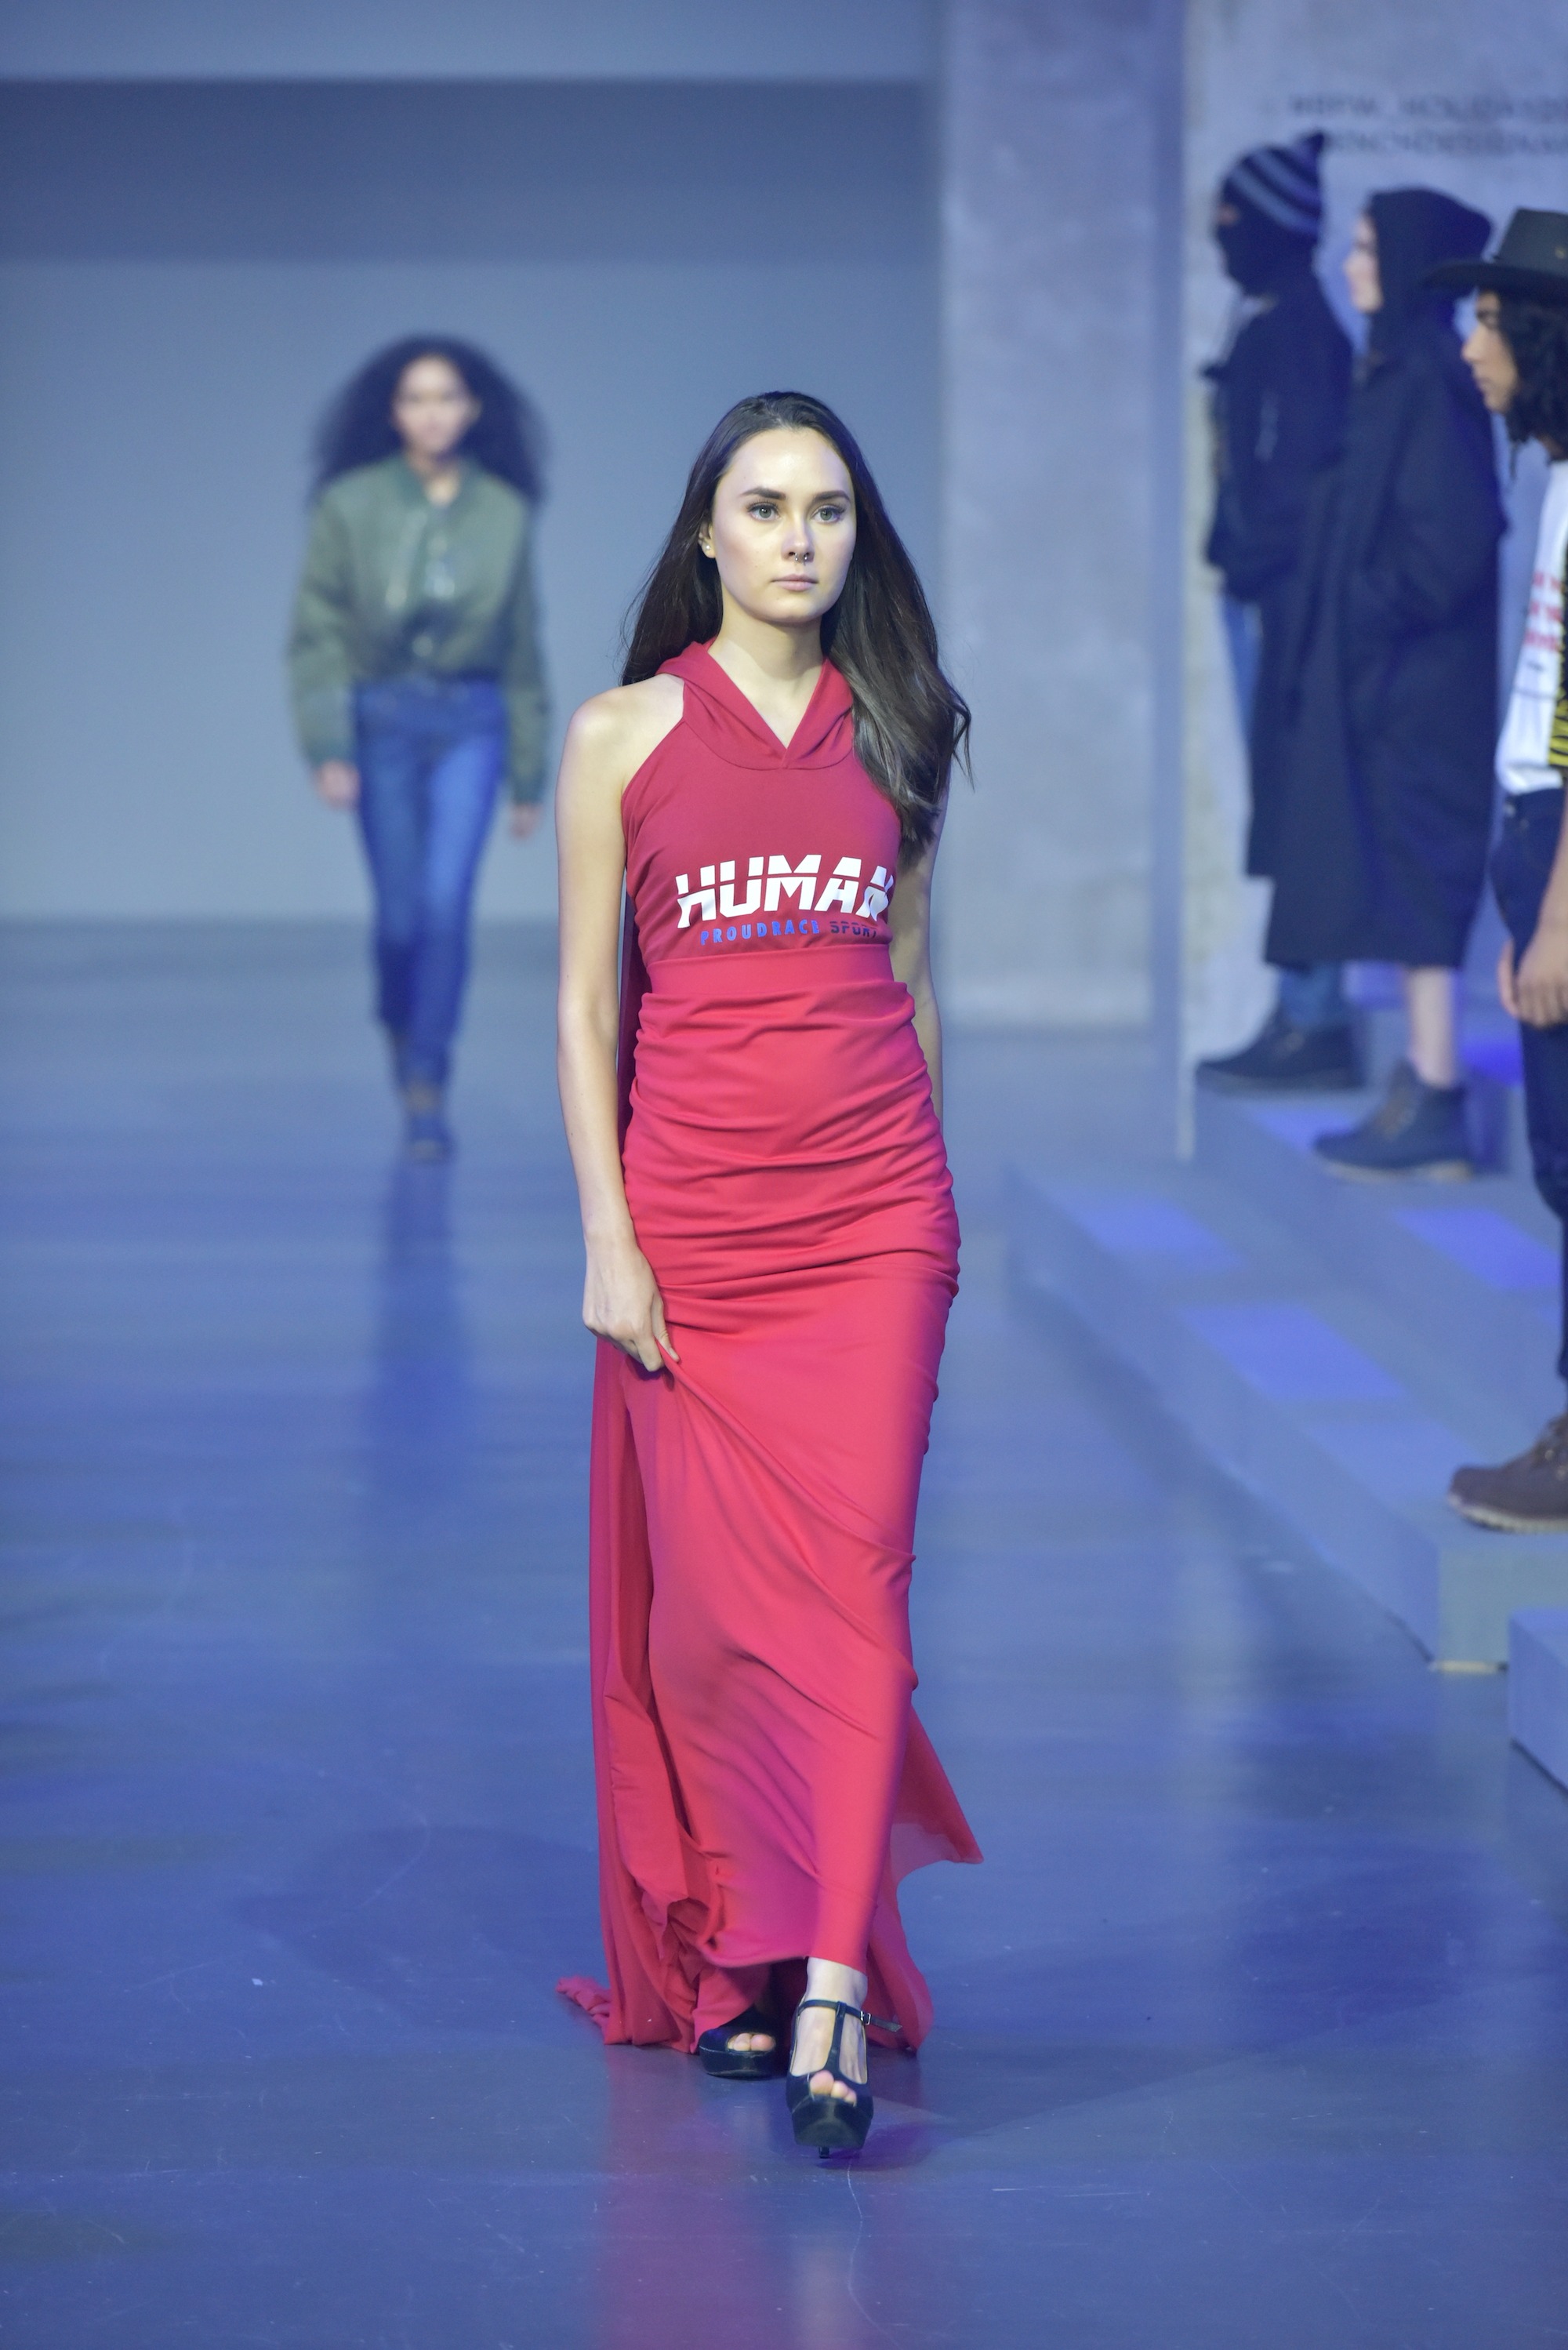 Bench Body heats up New York Fashion Week–a first for a Filipino brand -  PressReader